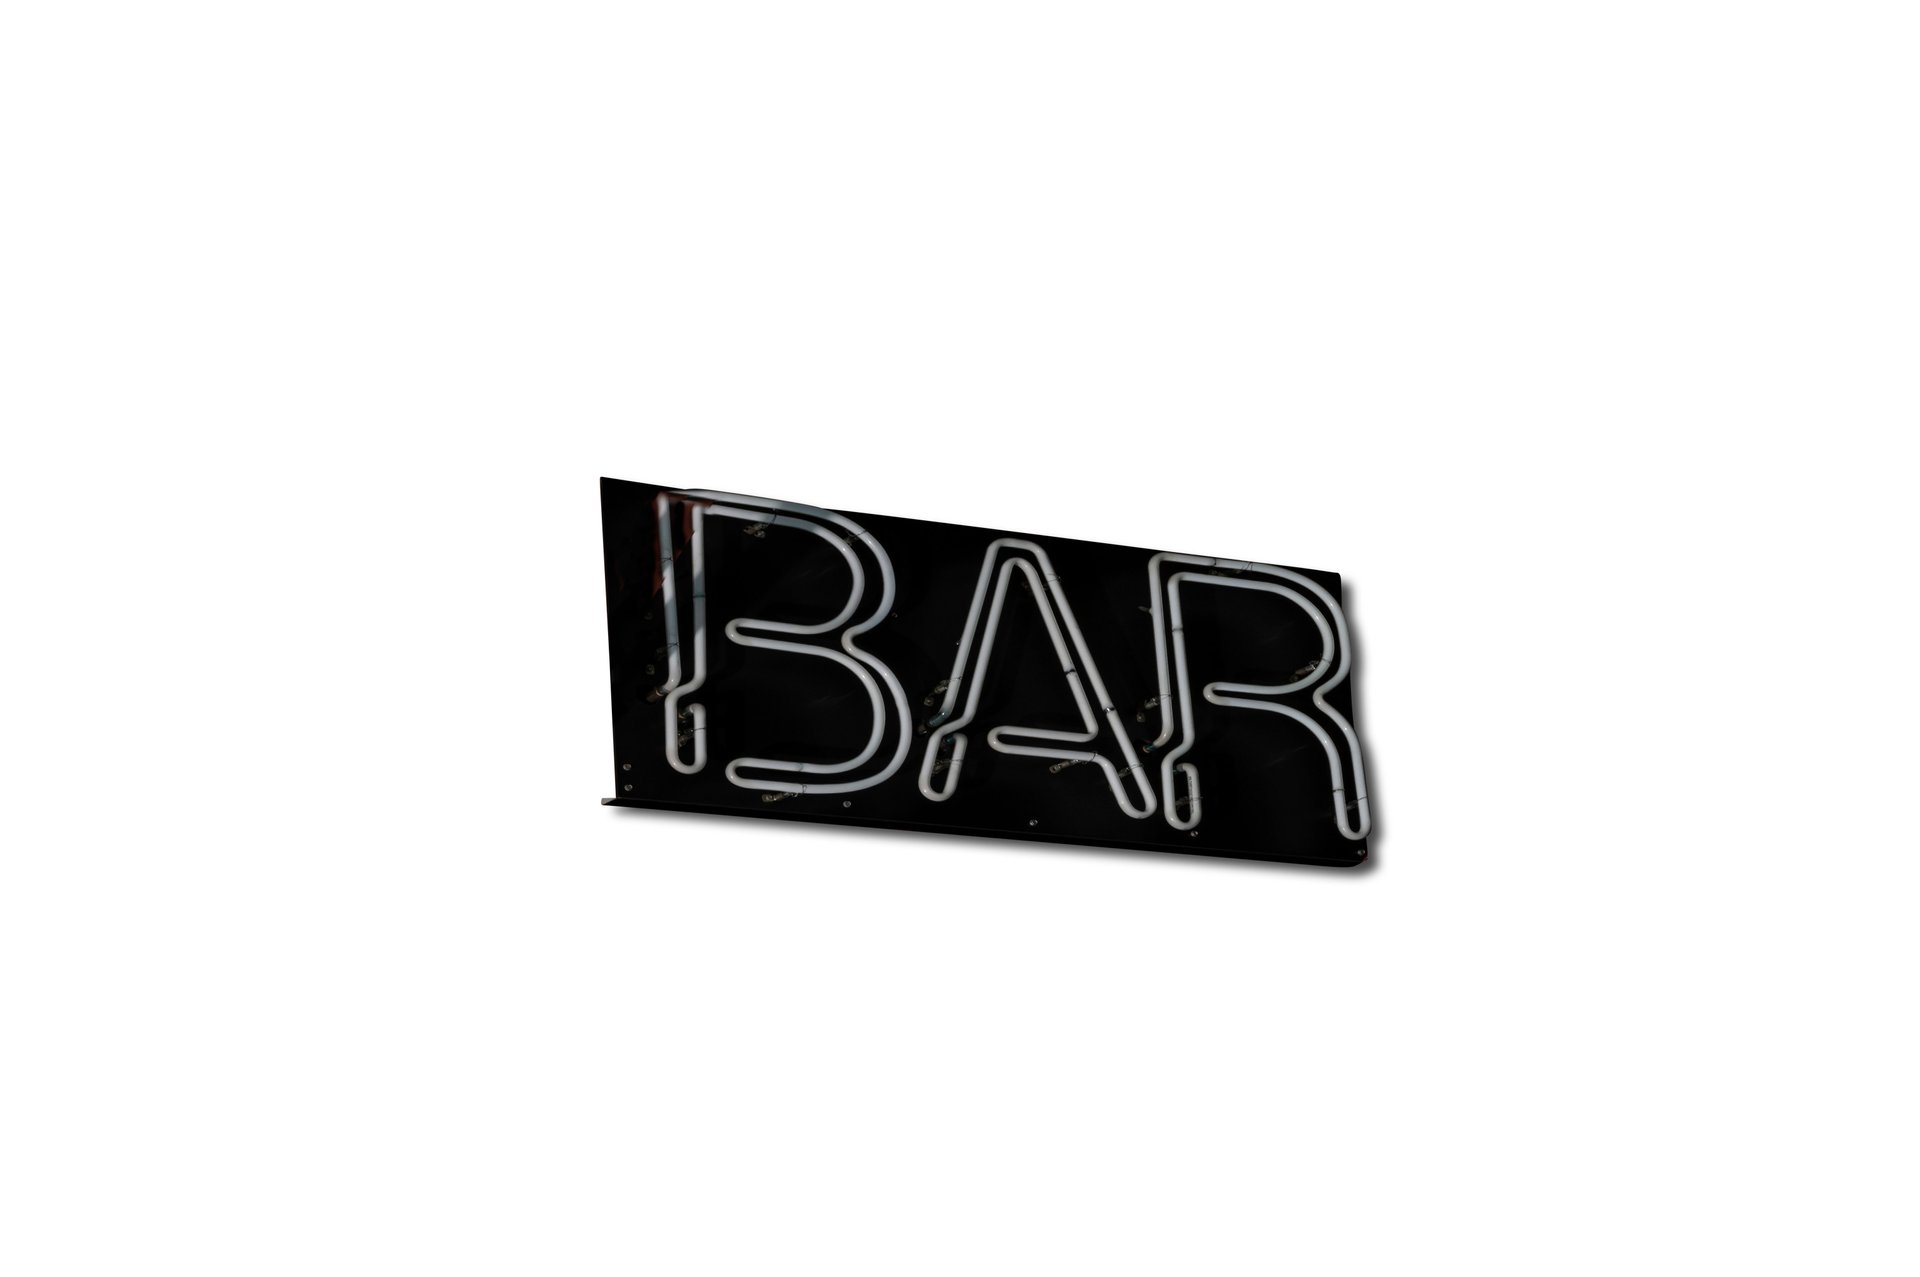 For Sale 'Bar' Illuminated Sign